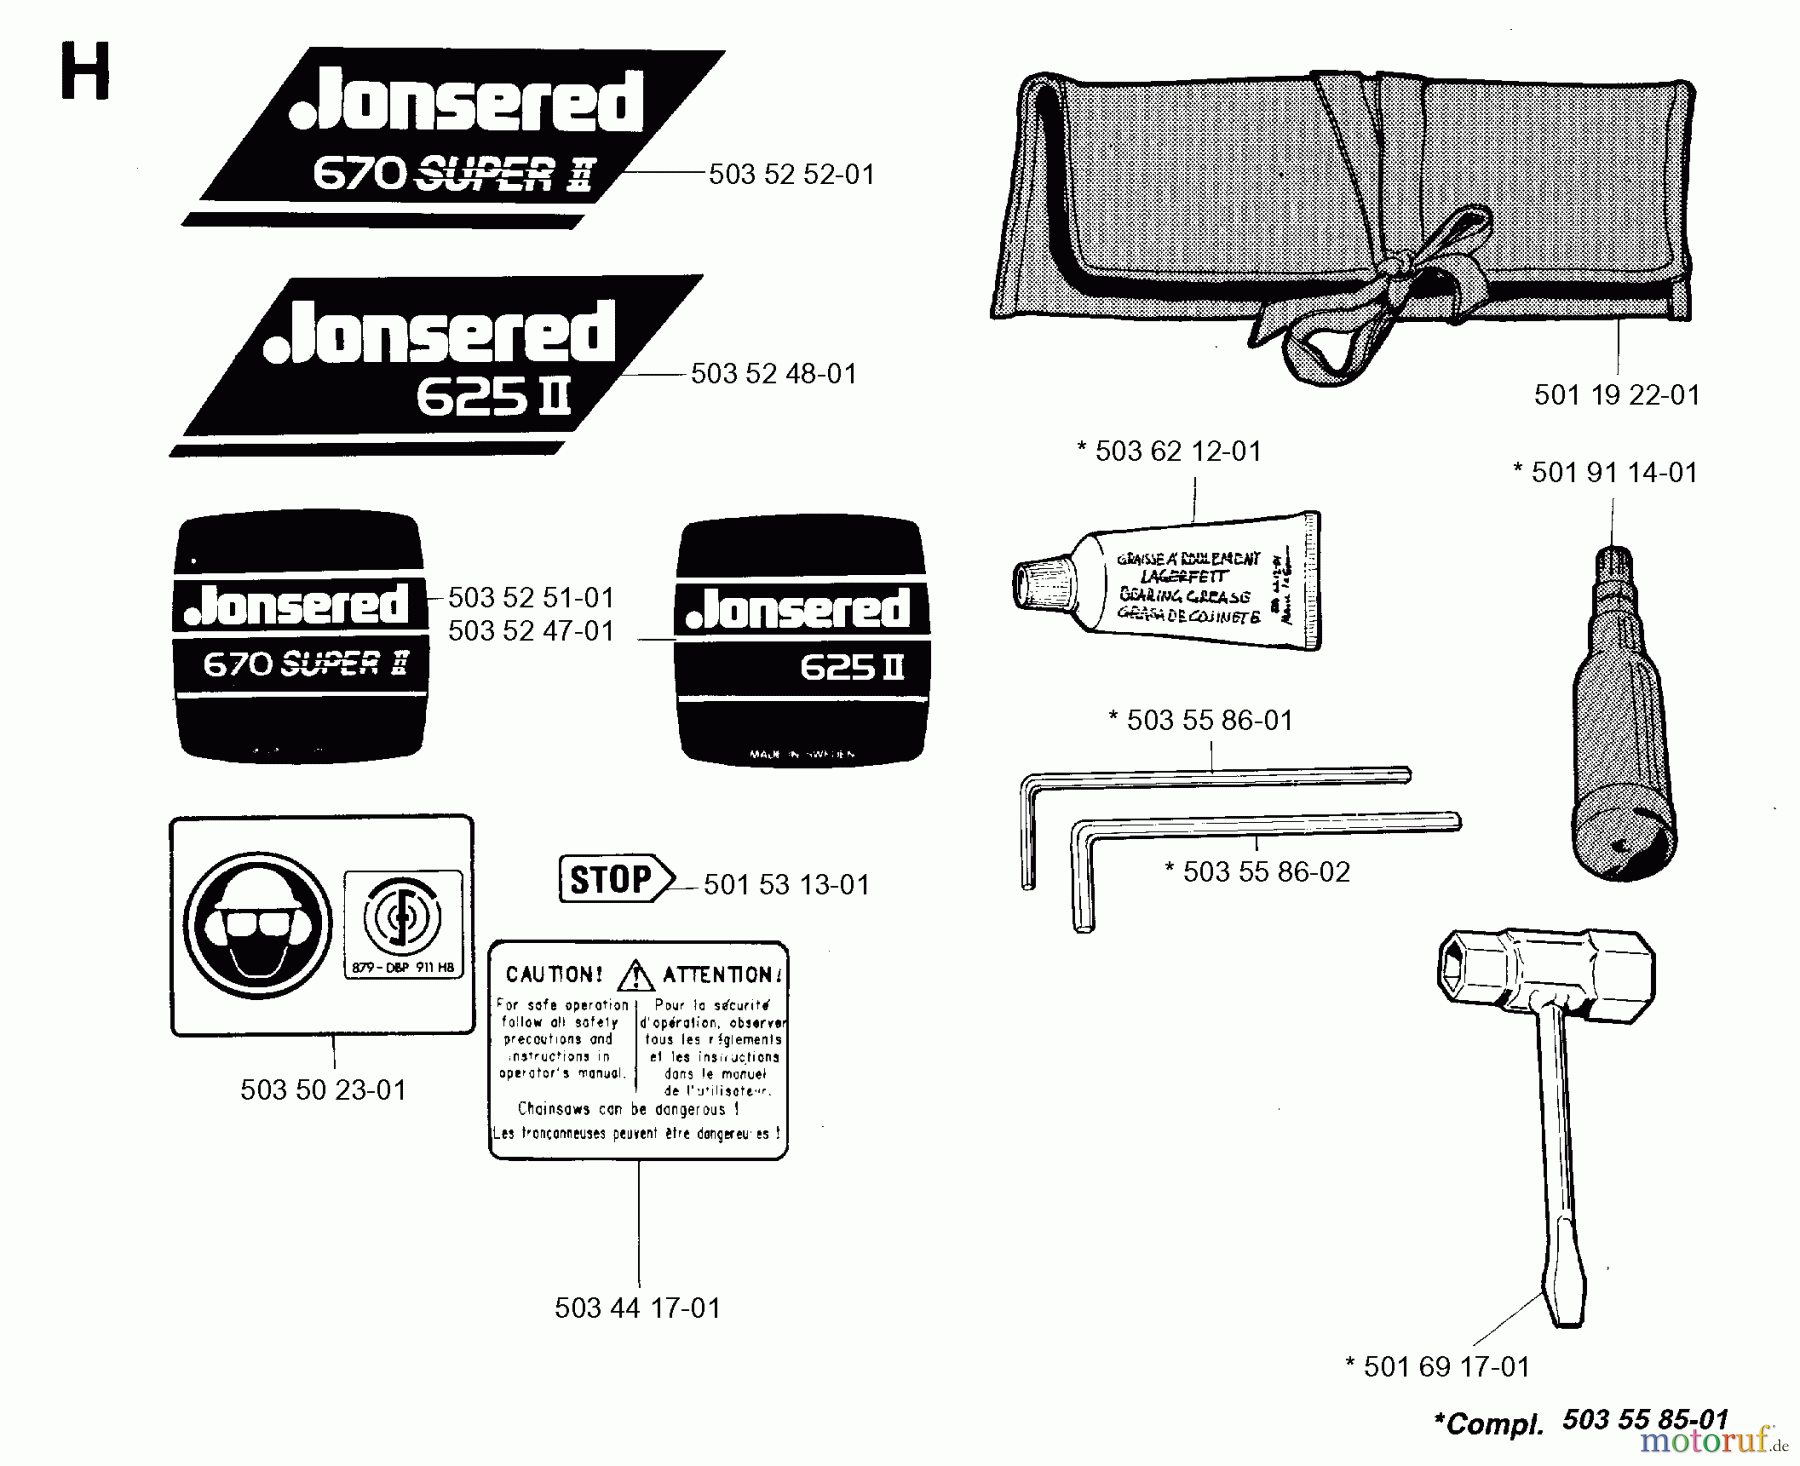  Jonsered Motorsägen 670 SUPER II - Jonsered Chainsaw (1993-06) ACCESSORIES #1